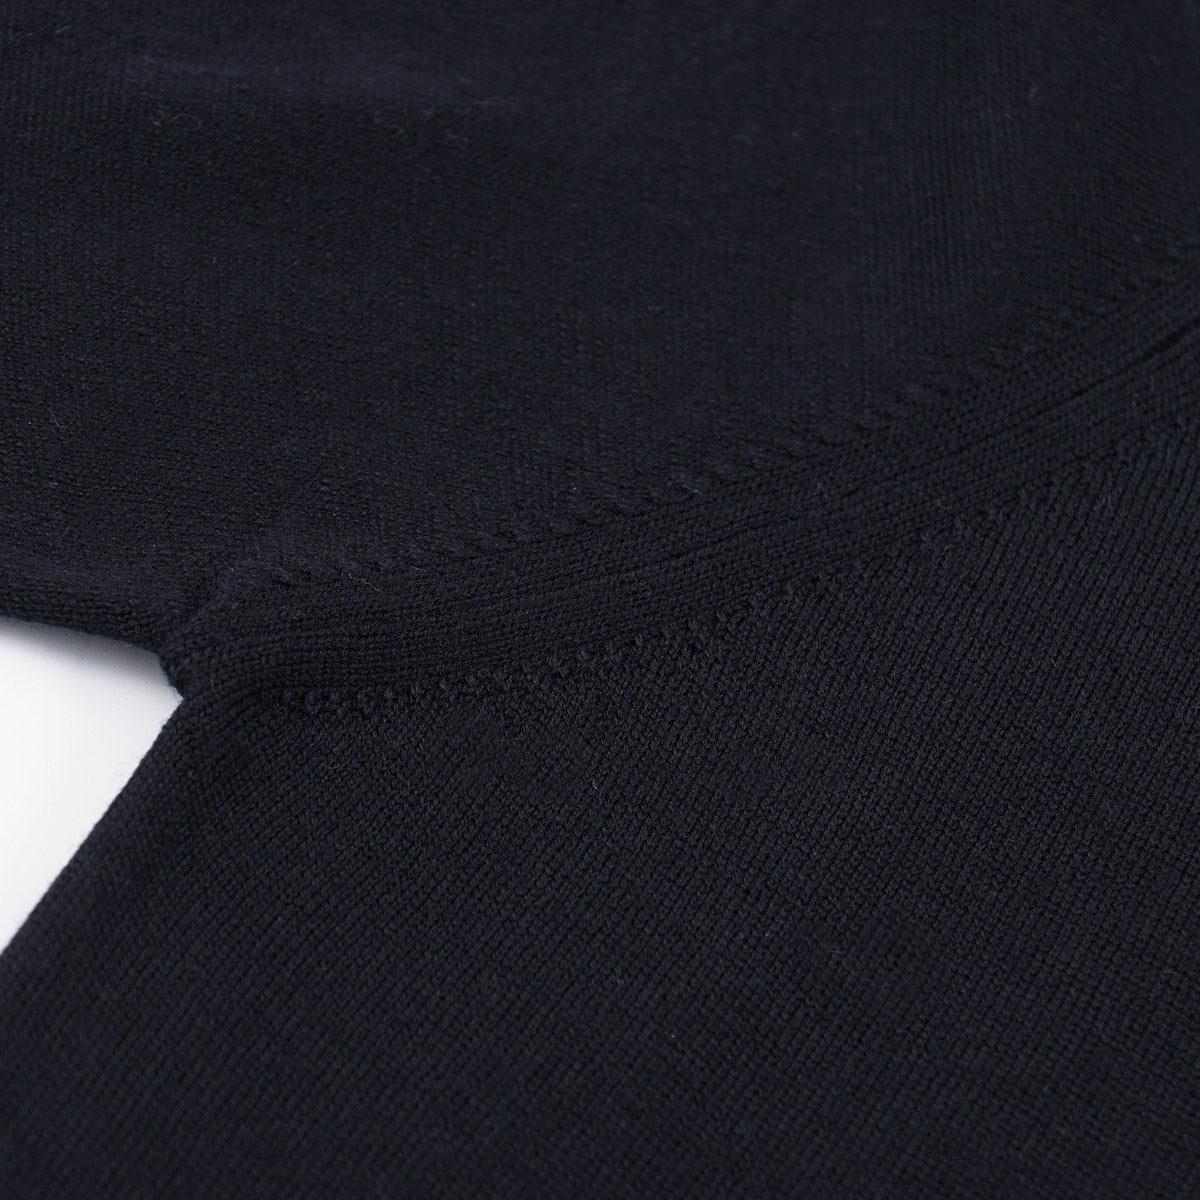 Cruciani Lightweight Merino Wool Sweater - Top Shelf Apparel